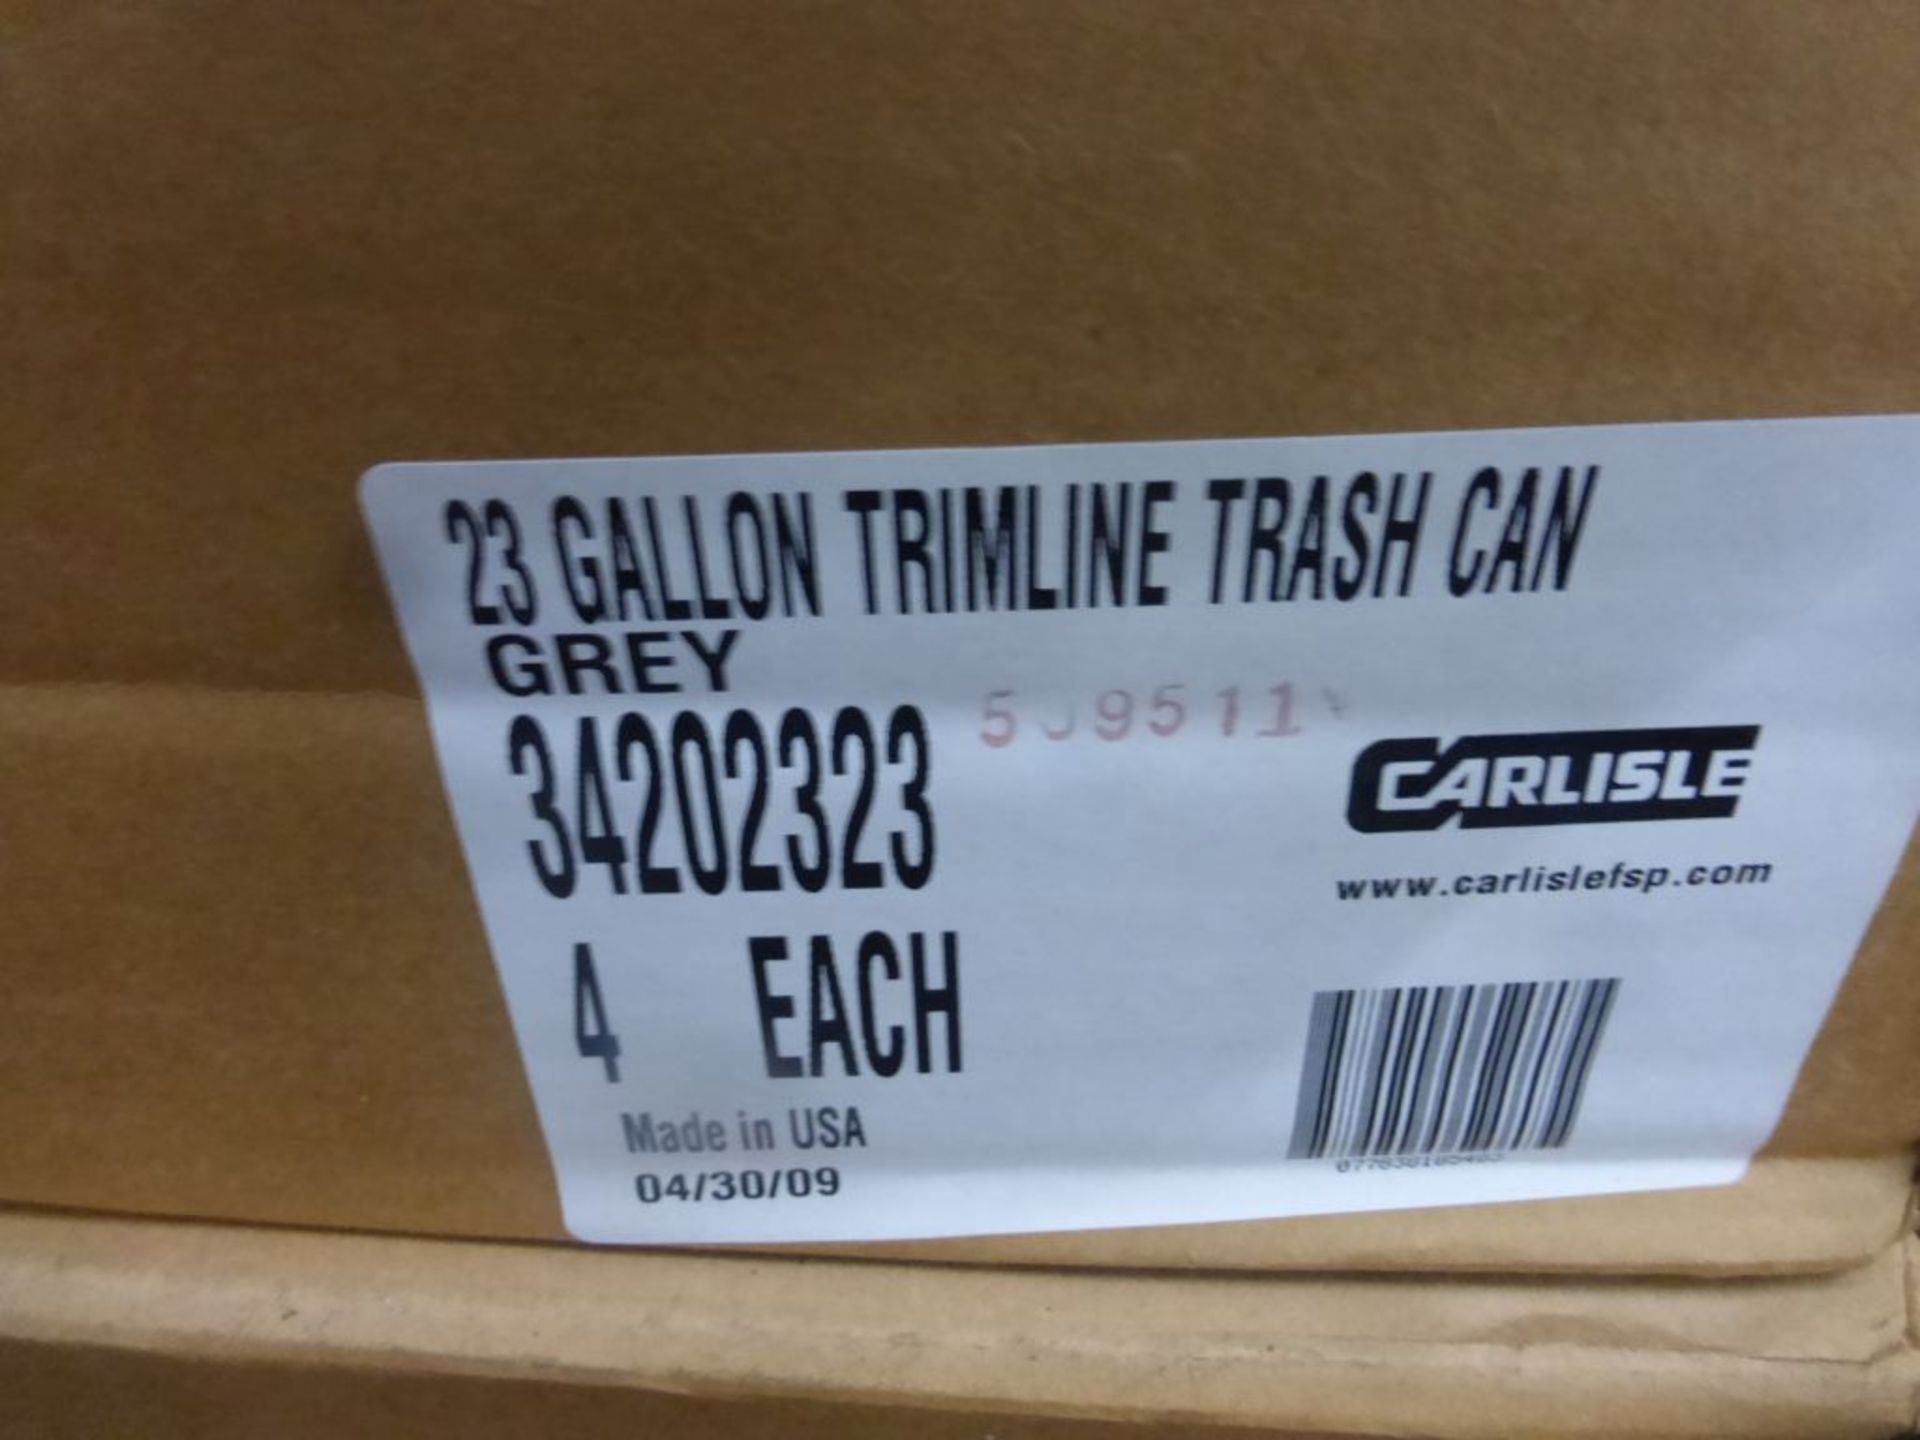 Lot of (20) Carlisle 23-Gallon Trimline Gray Trashcans | Part No. 34202323 - Image 8 of 10